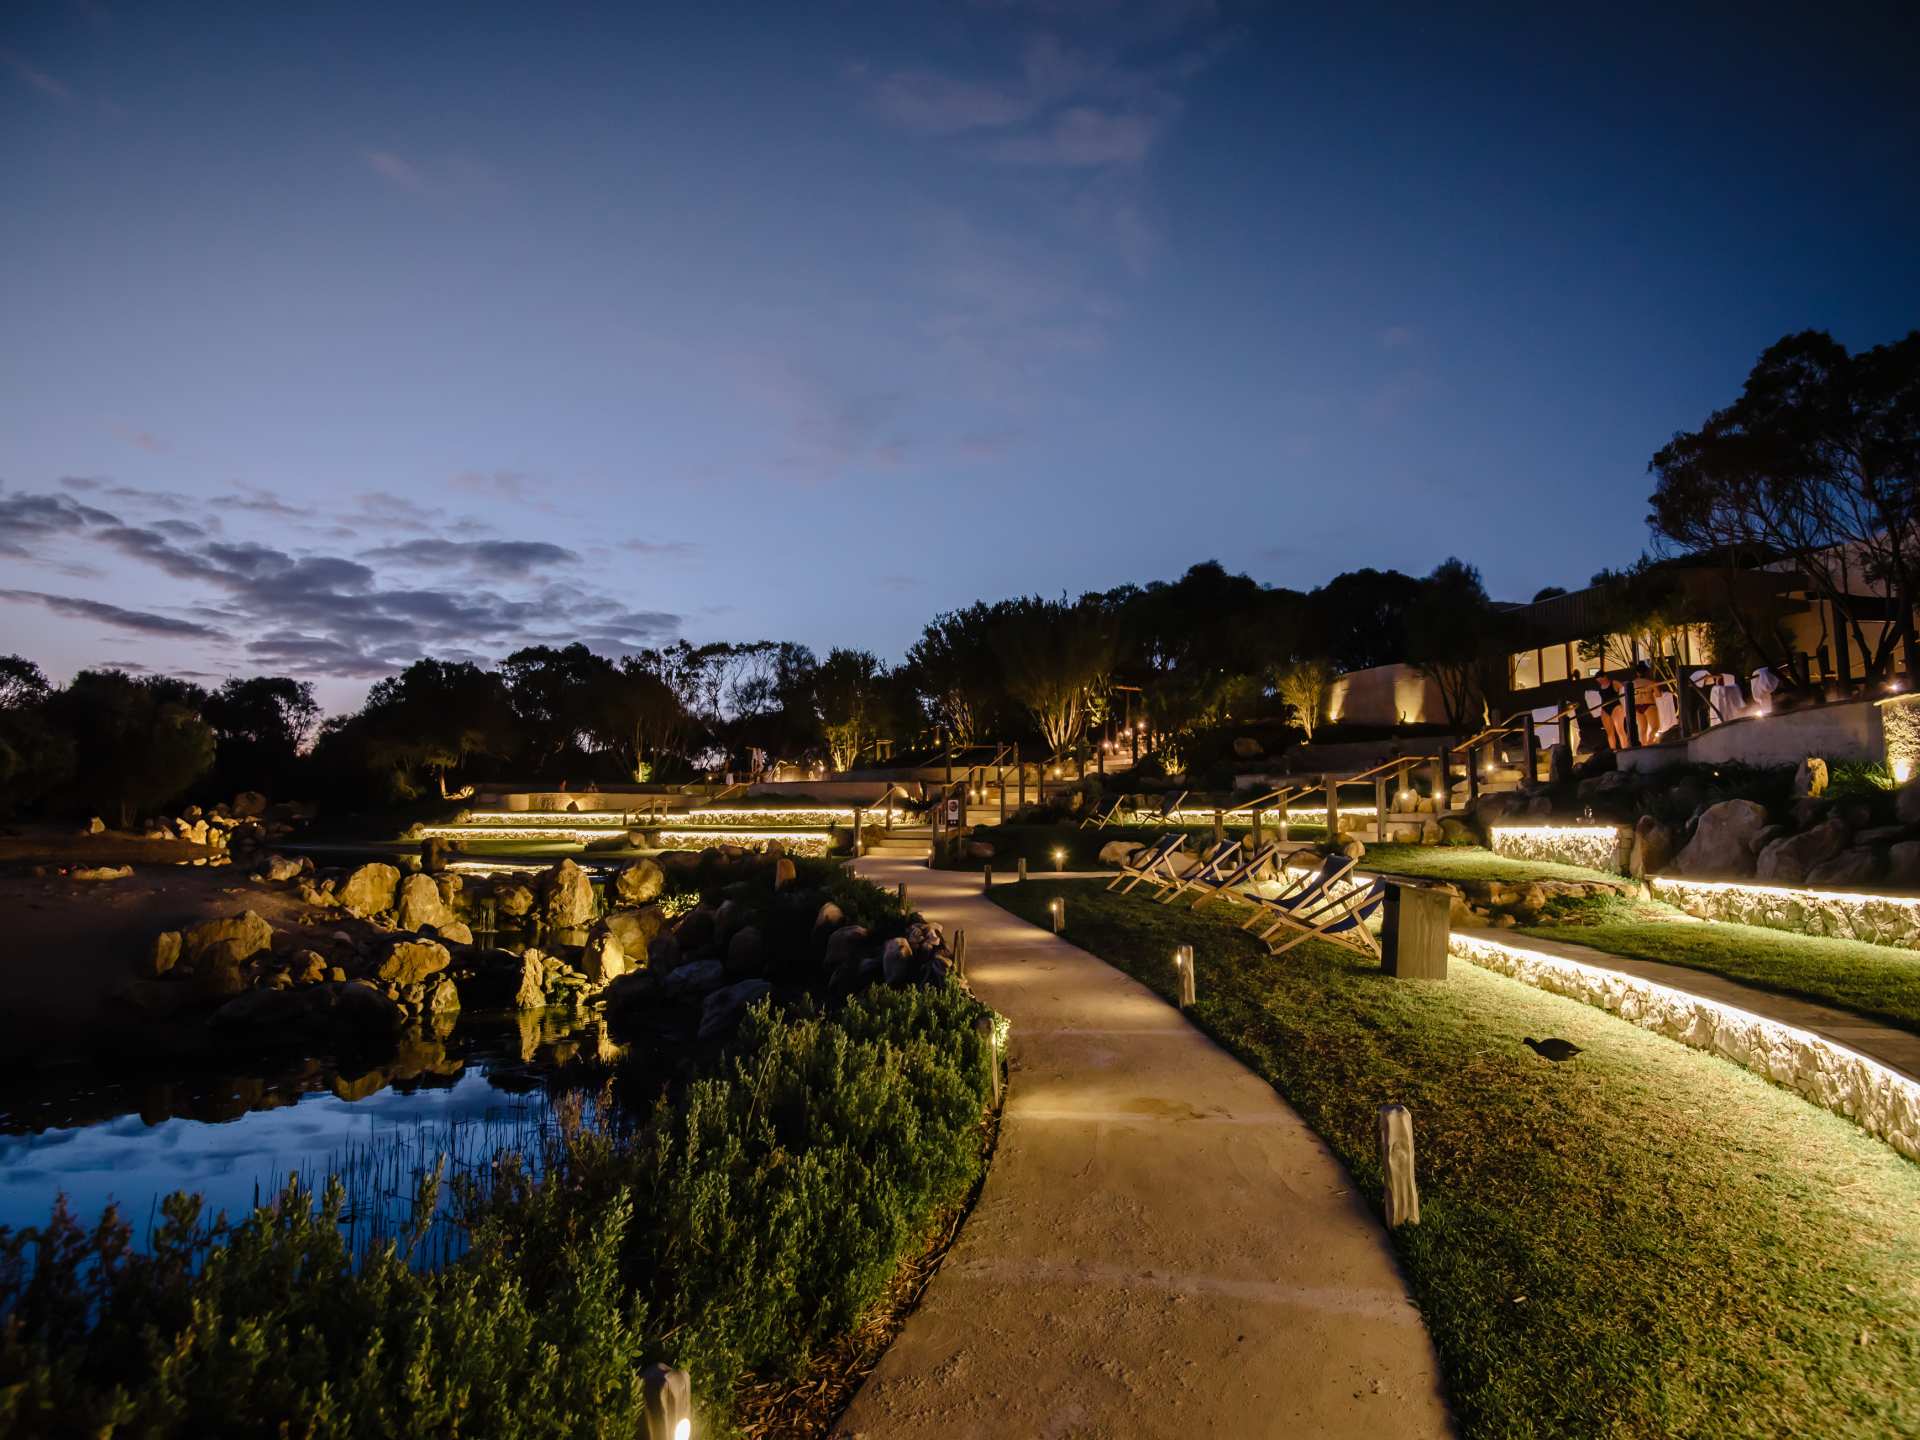 Nighttime at Peninsula Hot Springs in Victoria, Australia